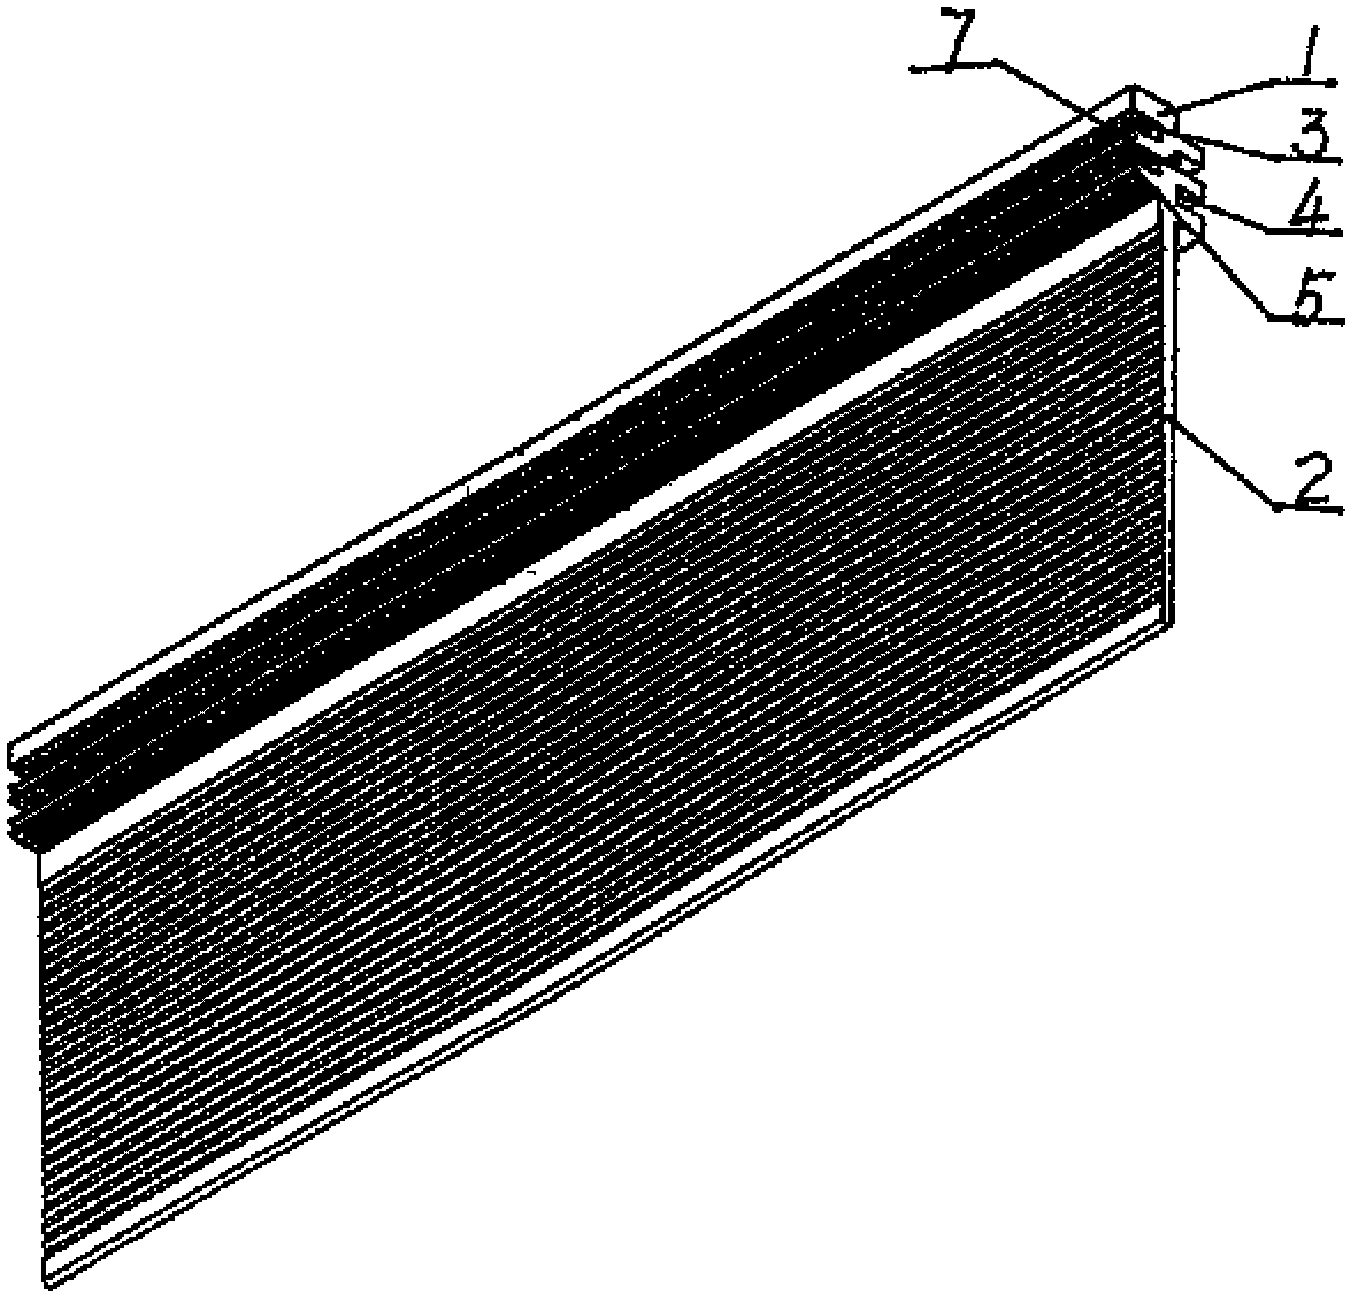 Compensation method of modular radiator manufacturing process